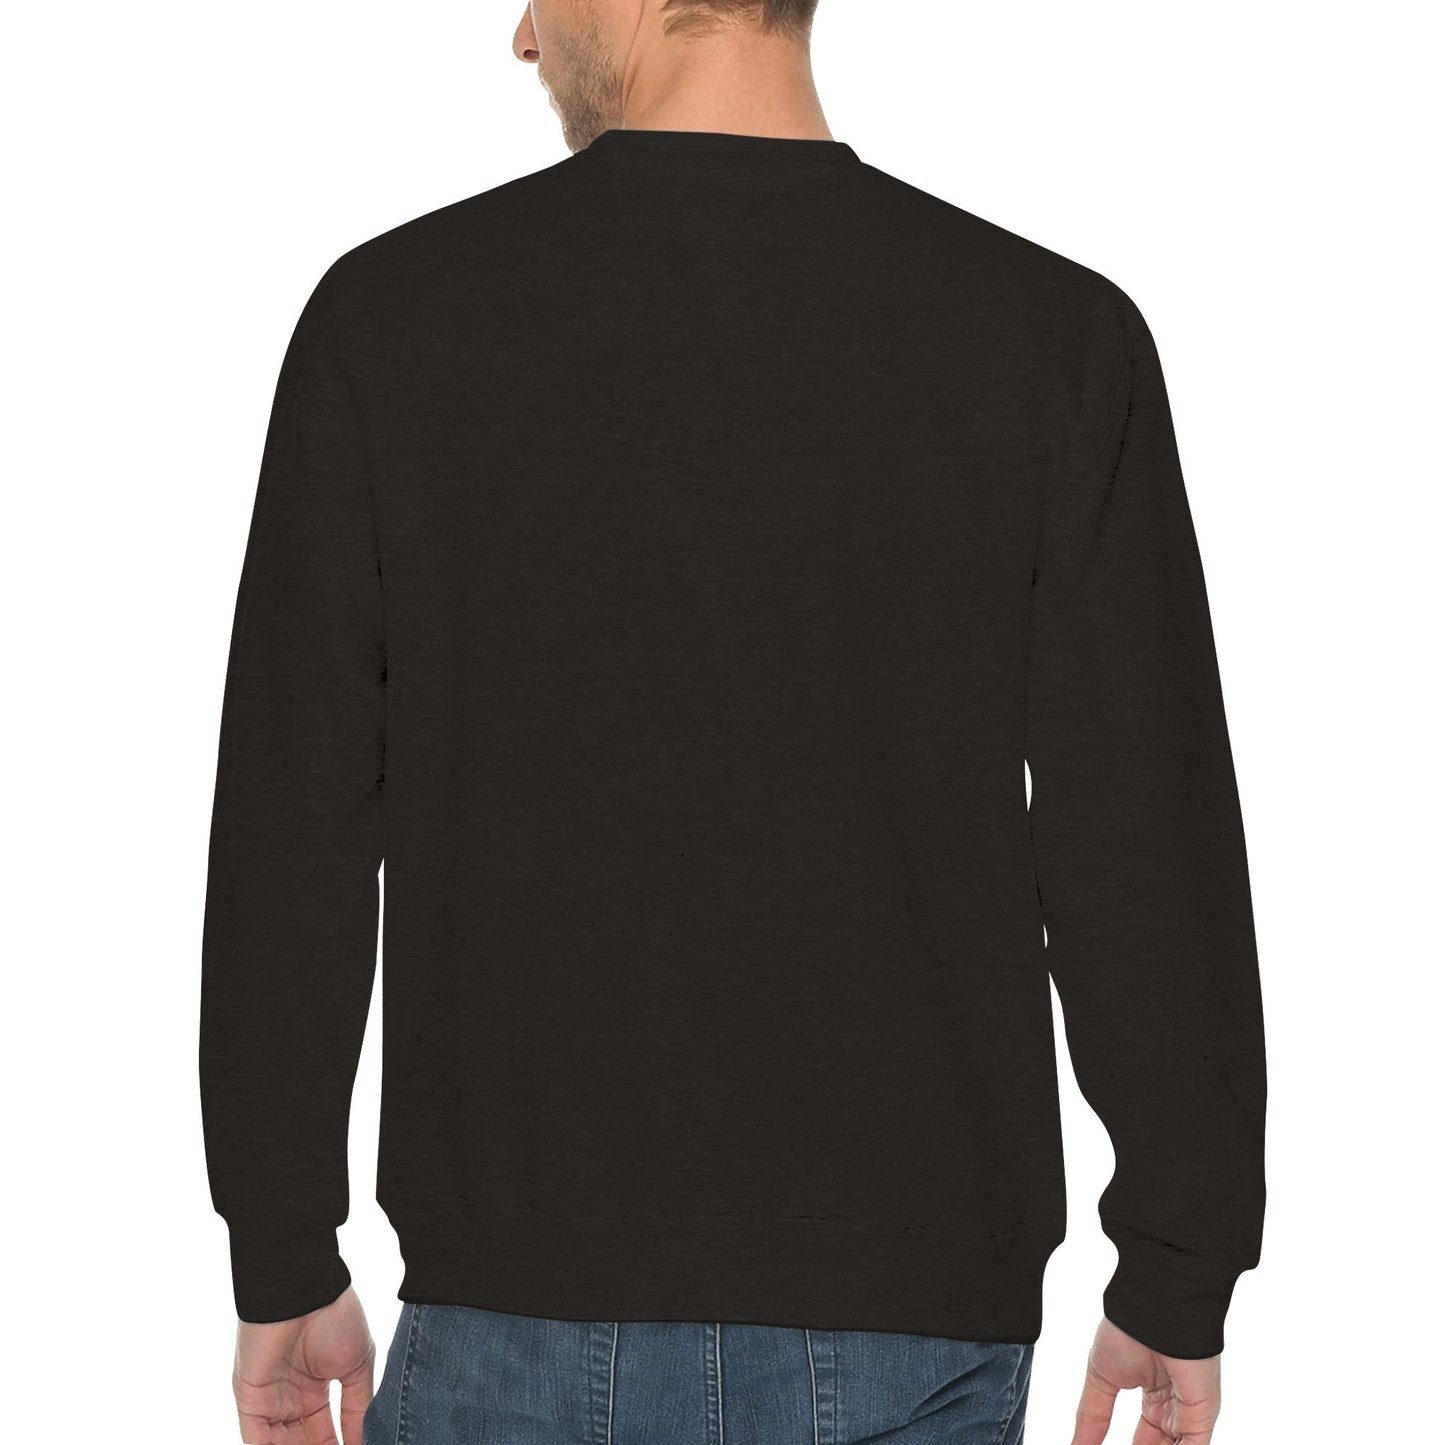 Premium Unisex Crewneck Sweatshirt - One Down - The Vandi Company